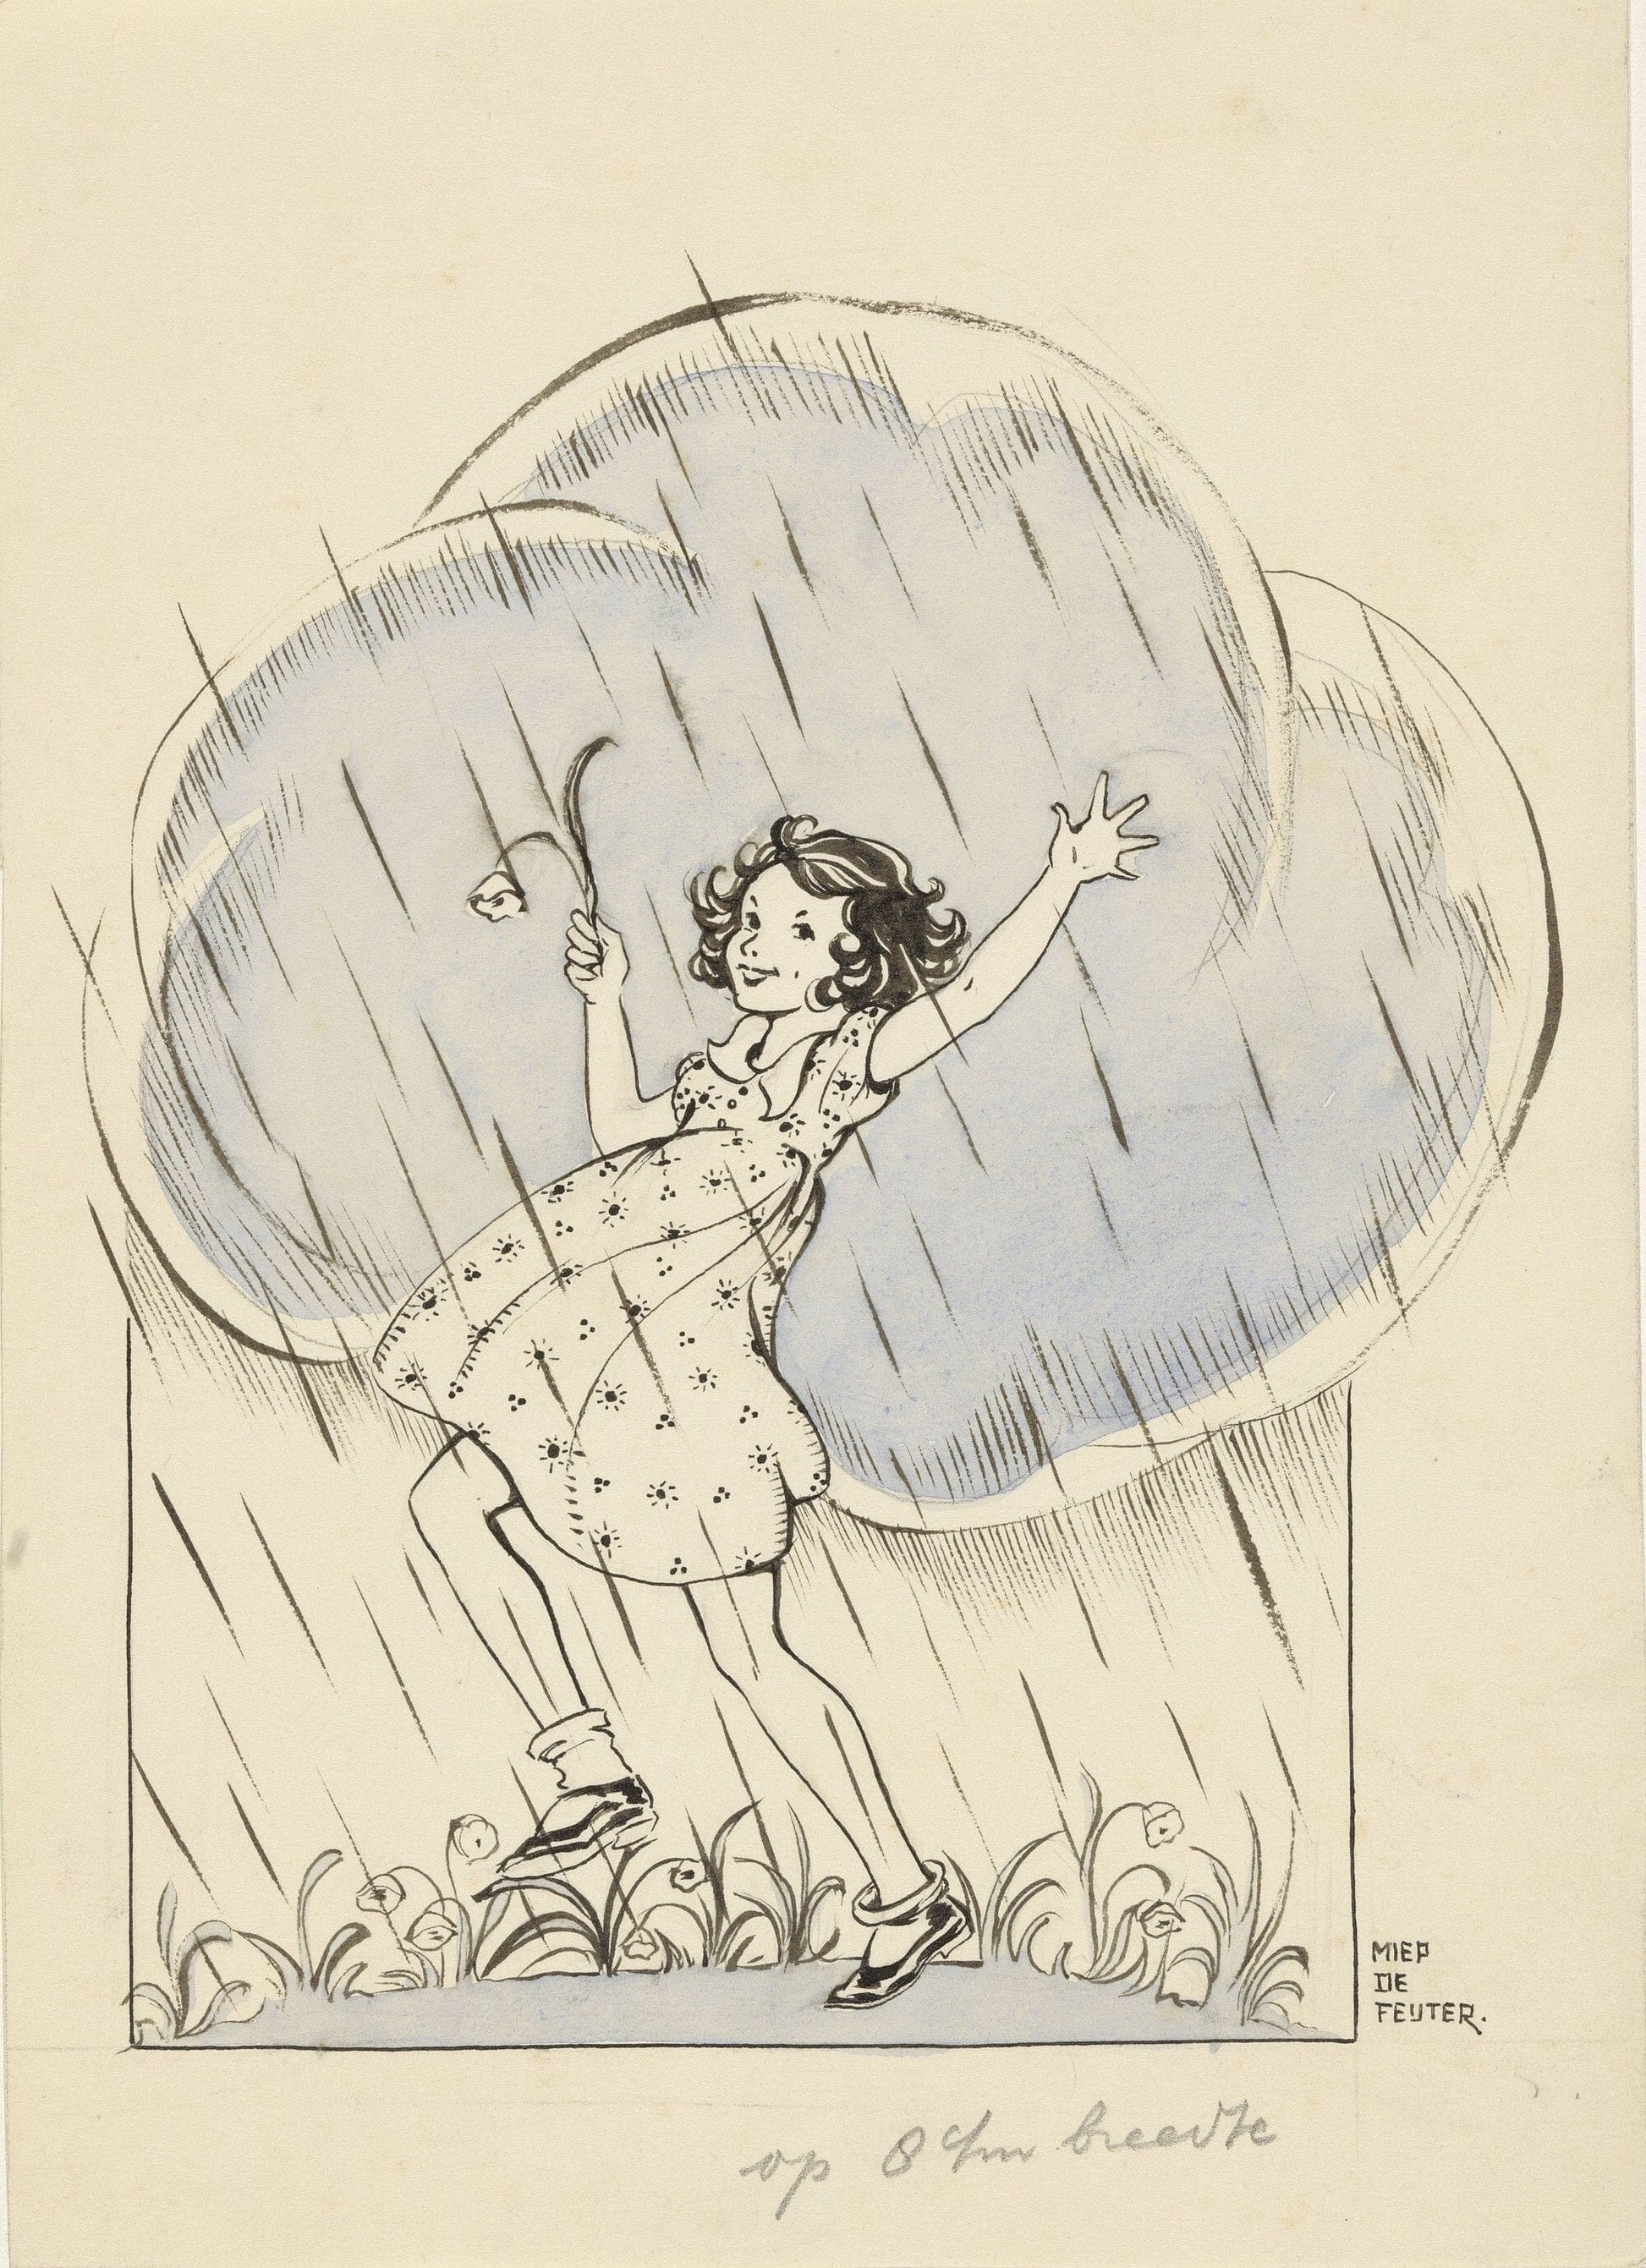 Dancing in the rain | Bathroom wall art print (c1930s) | Miep de Feijter  The Trumpet Shop   